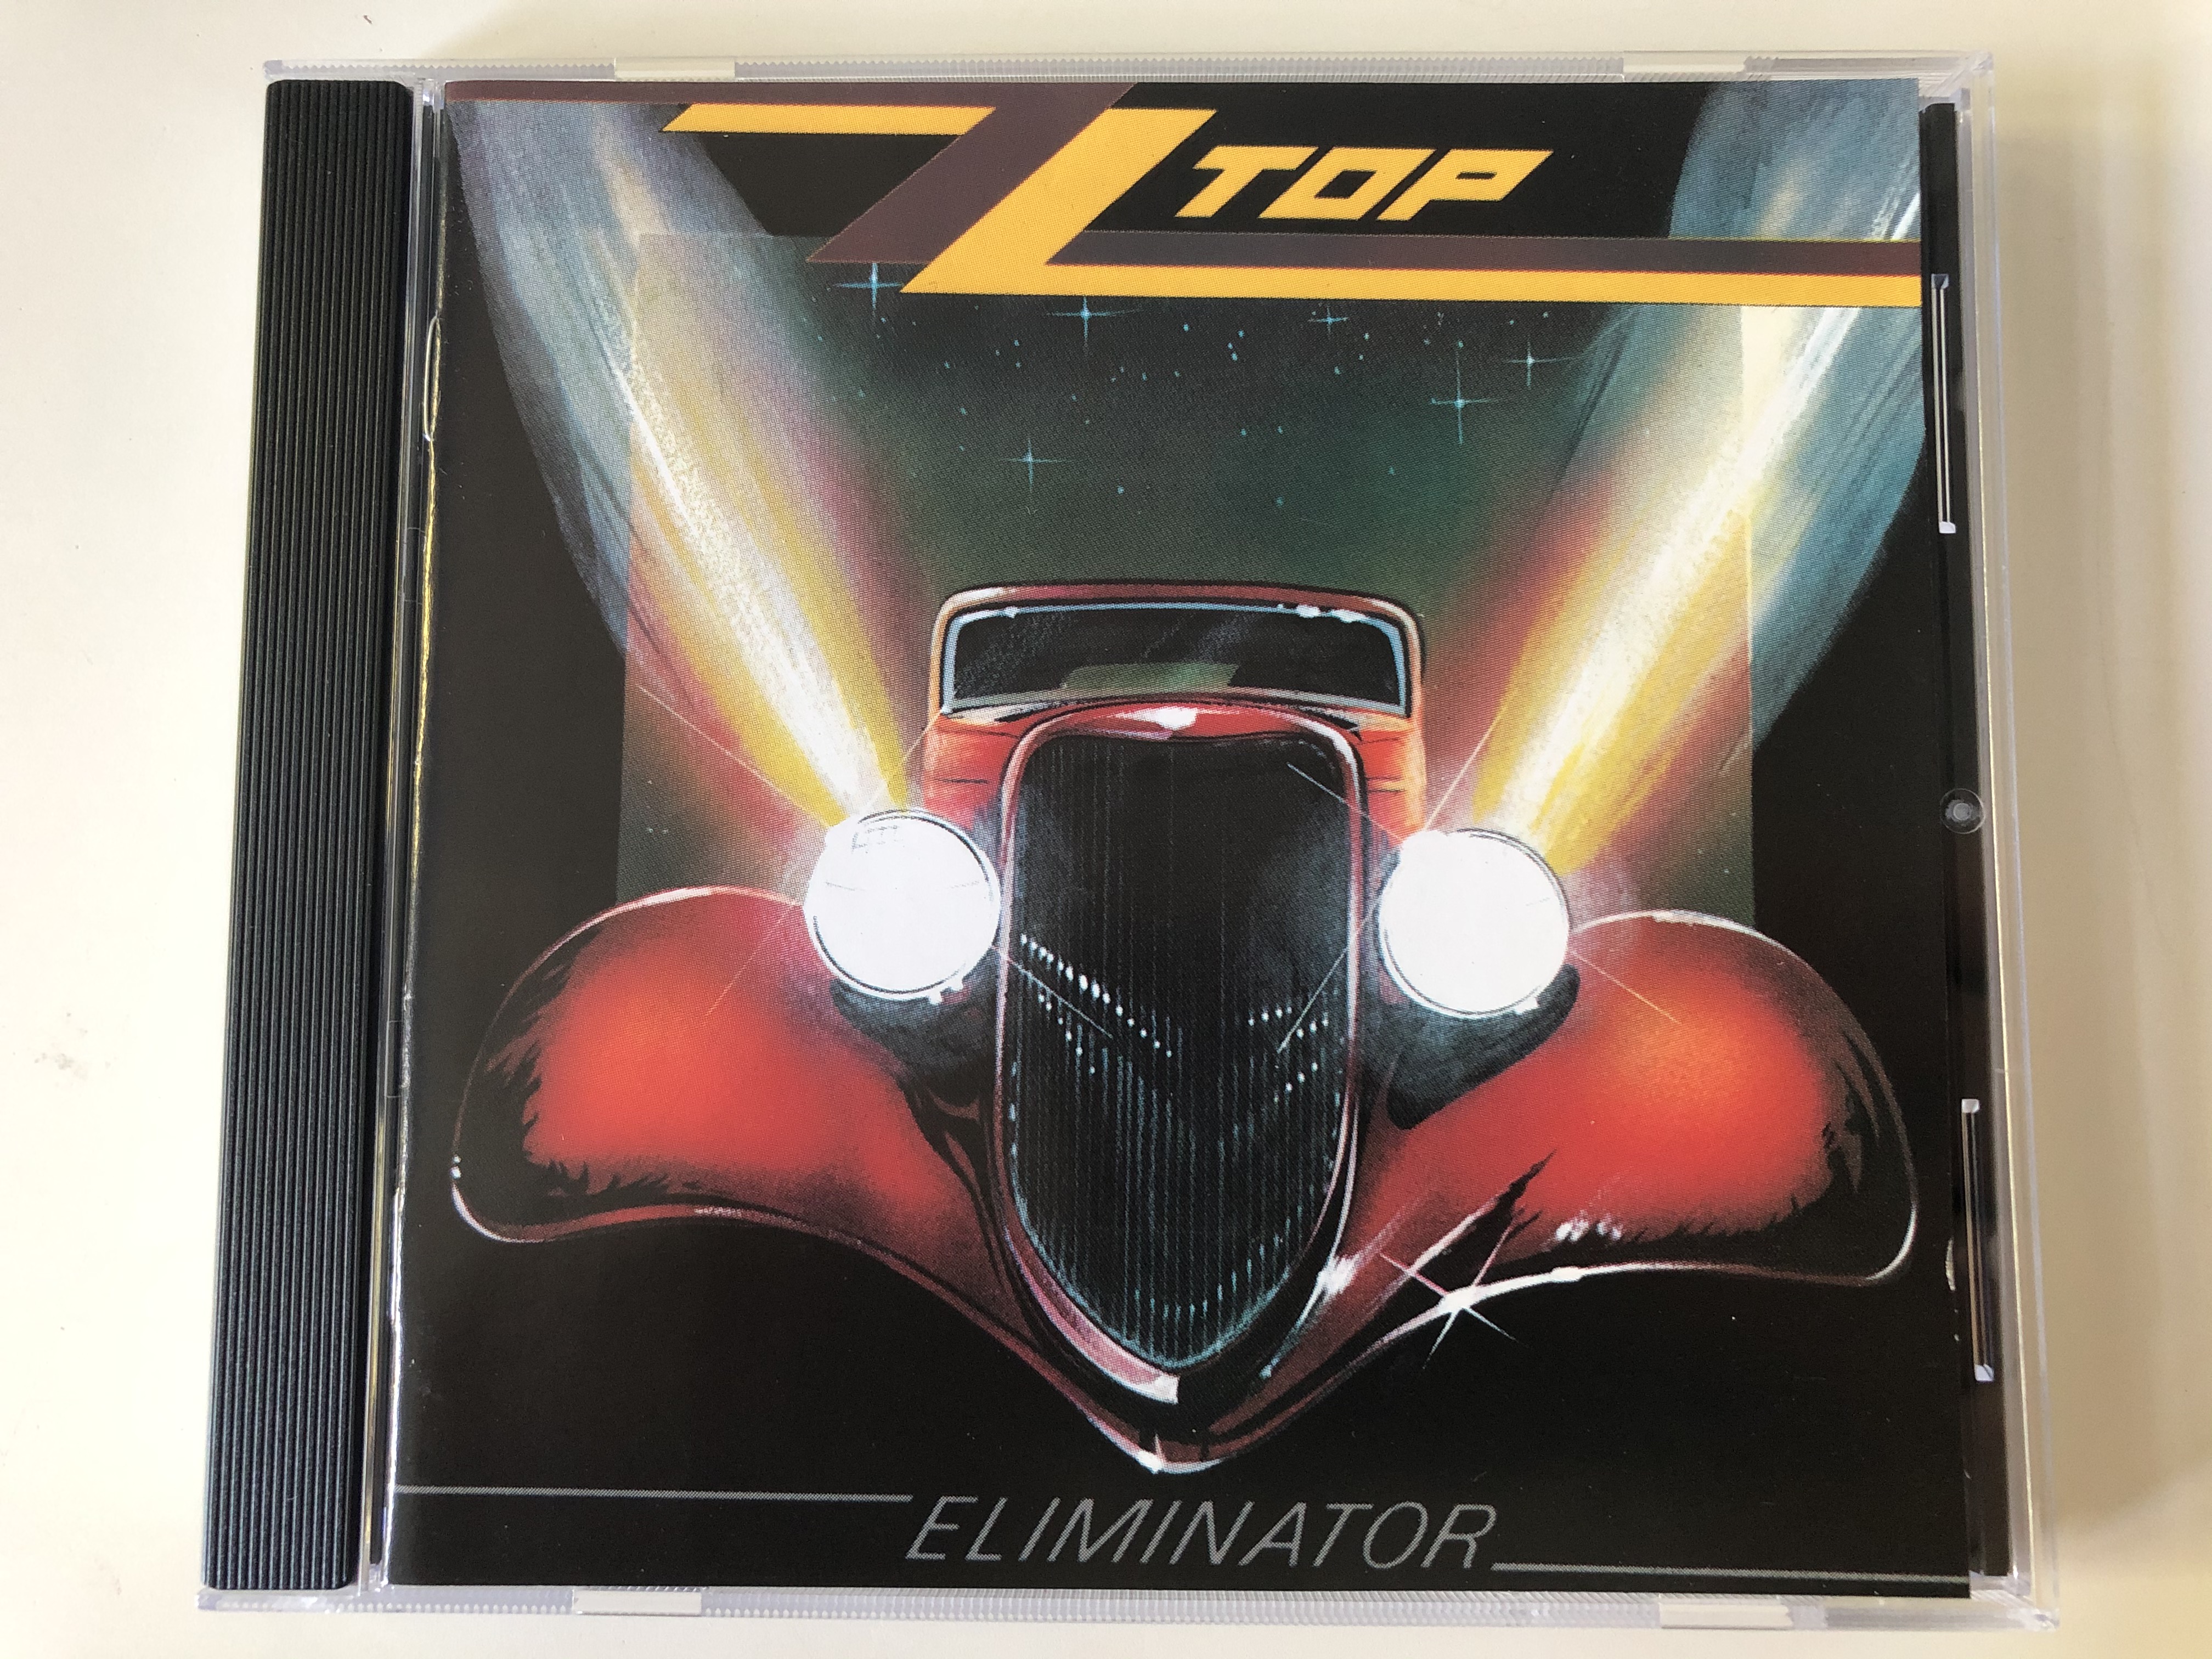 zz-top-eliminator-warner-bros.-records-audio-cd-1983-7599-23774-2-1-.jpg